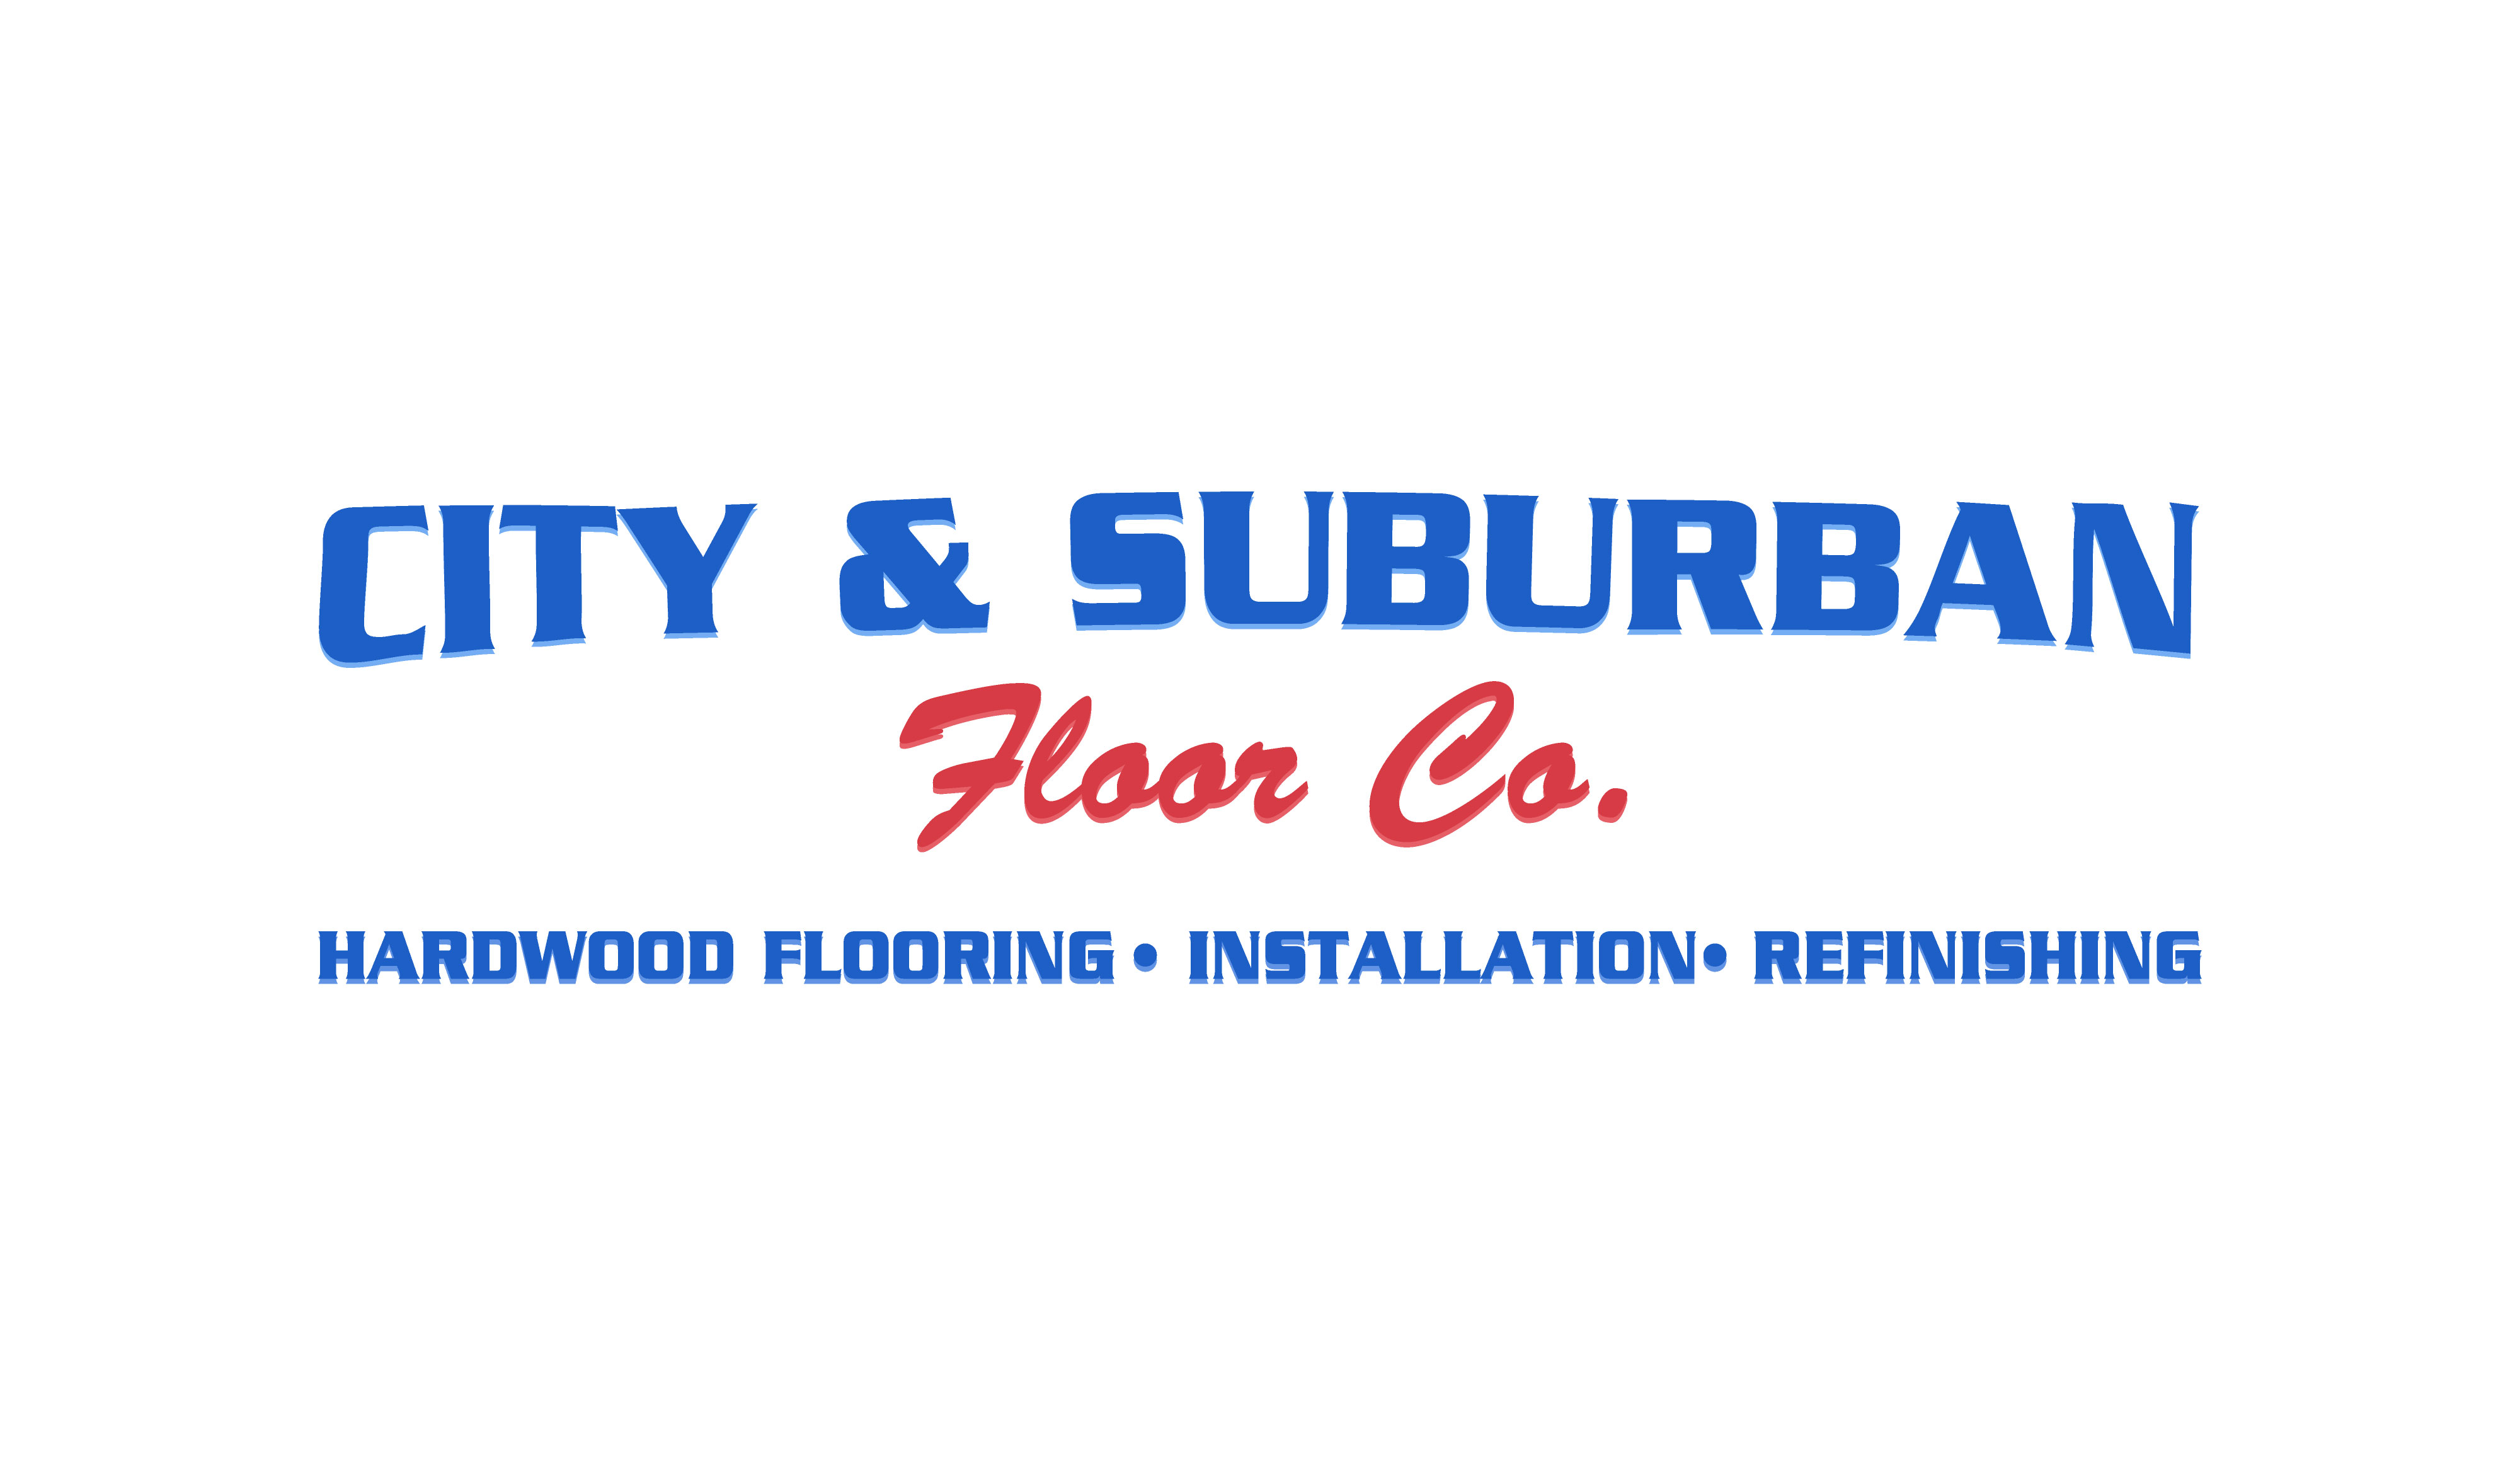 City & Suburban Floor Sanding Co.